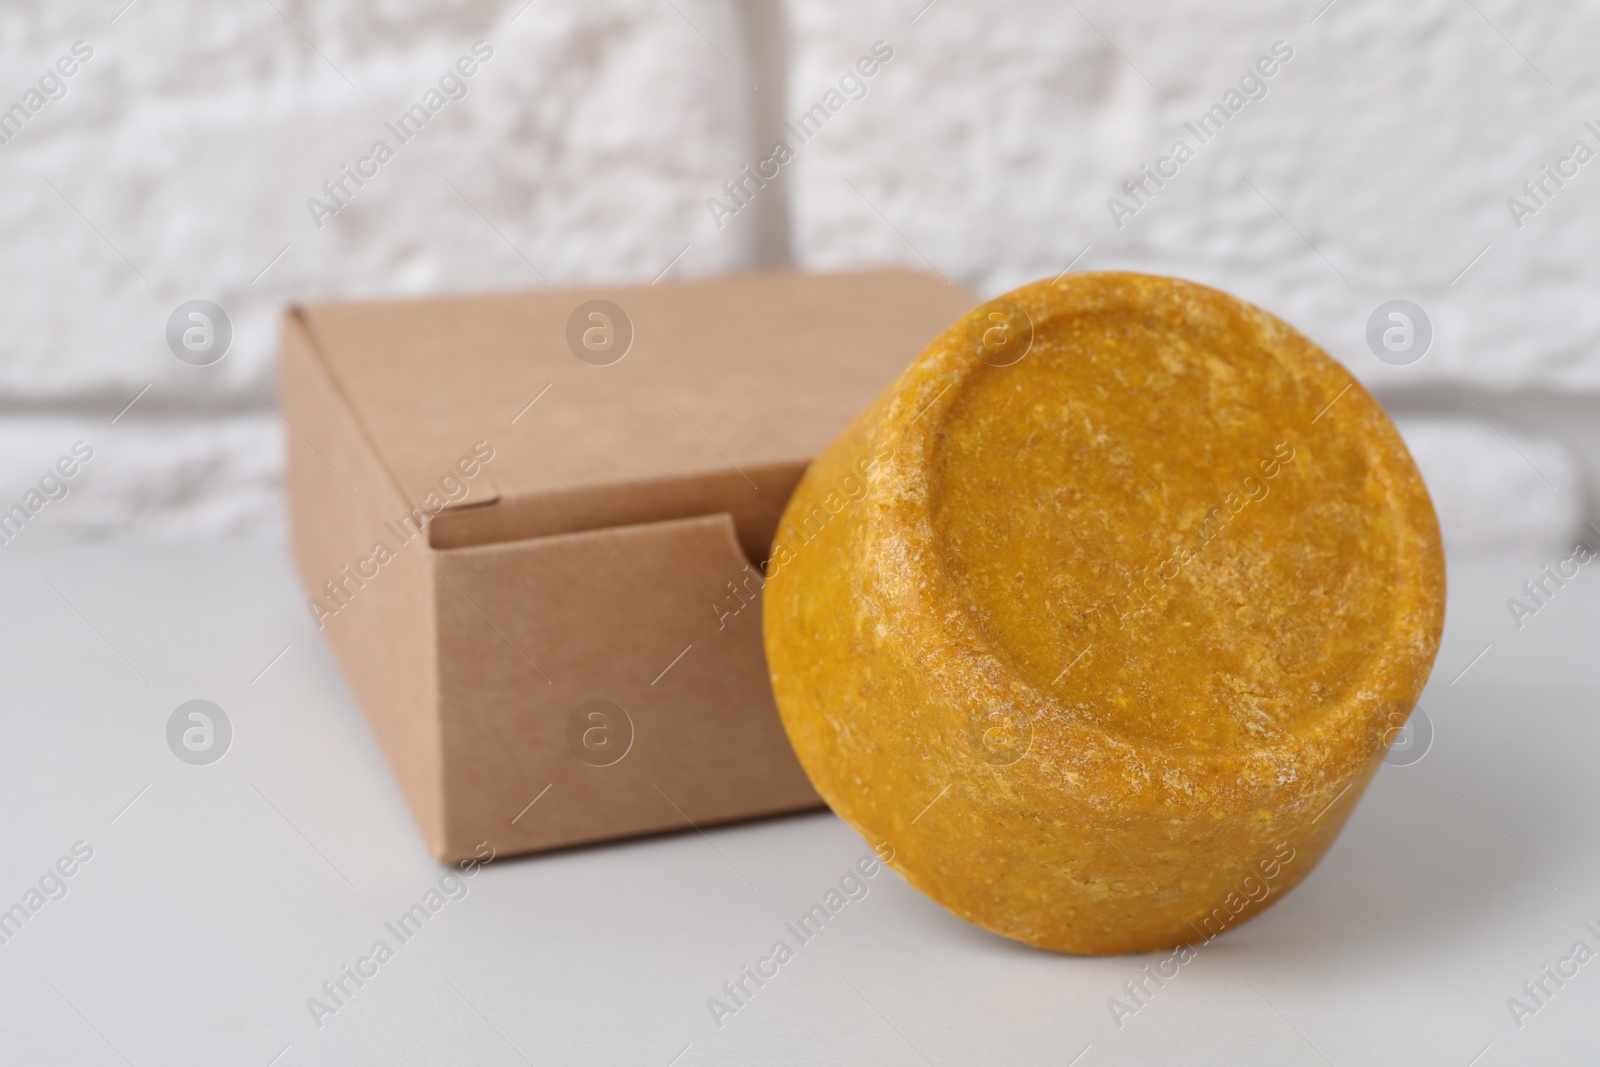 Photo of Orange solid shampoo bar and box on white table, closeup